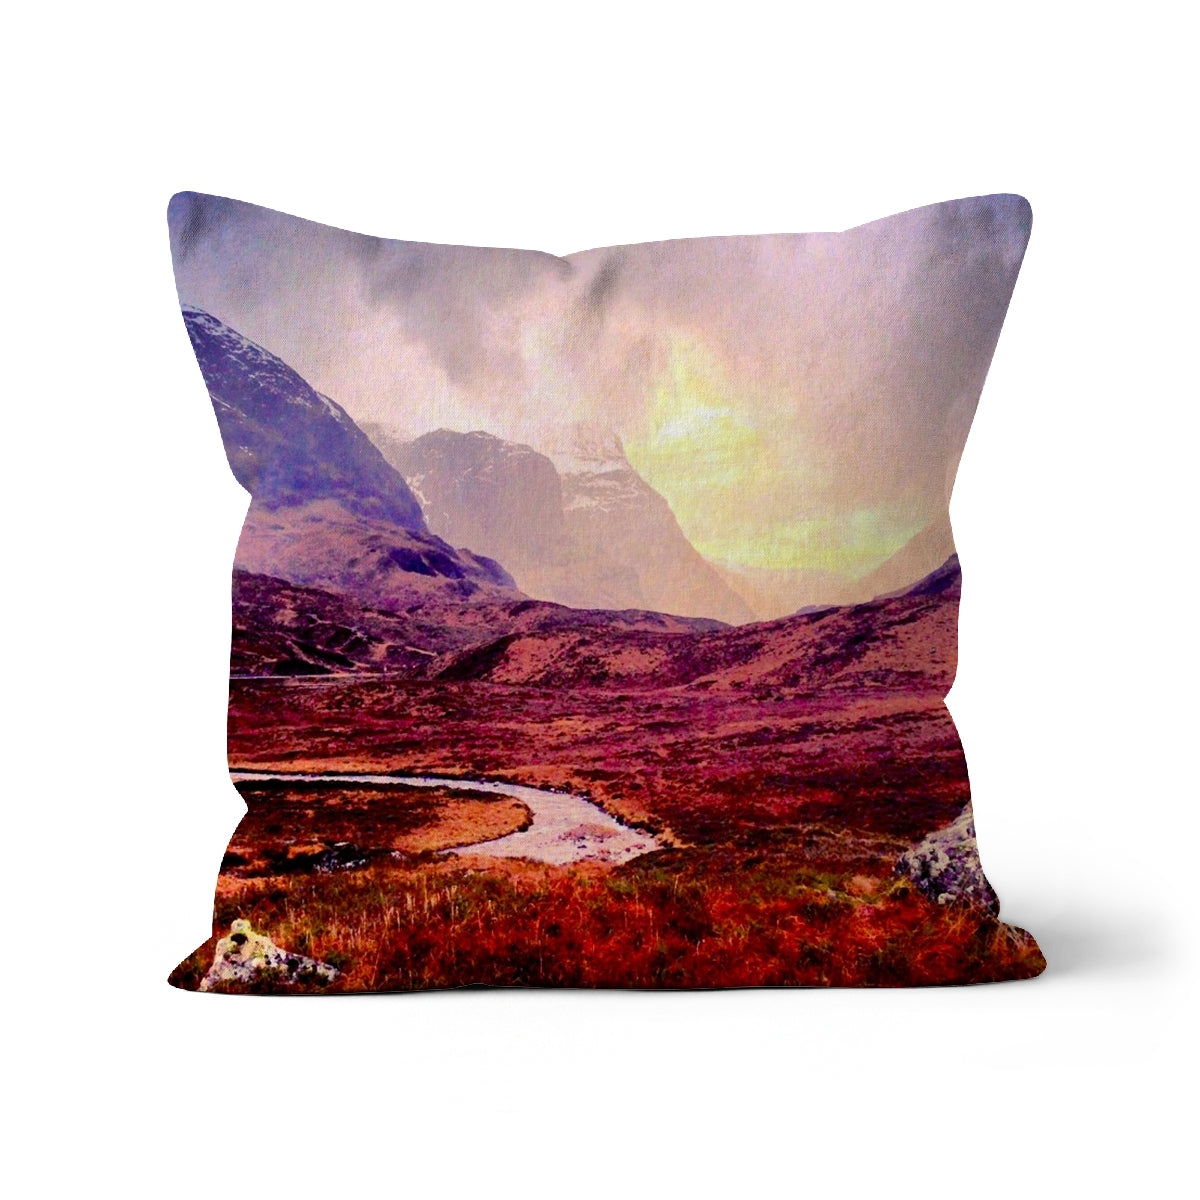 A Brooding Glencoe Art Gifts Cushion-Cushions-Glencoe Art Gallery-Canvas-12"x12"-Paintings, Prints, Homeware, Art Gifts From Scotland By Scottish Artist Kevin Hunter